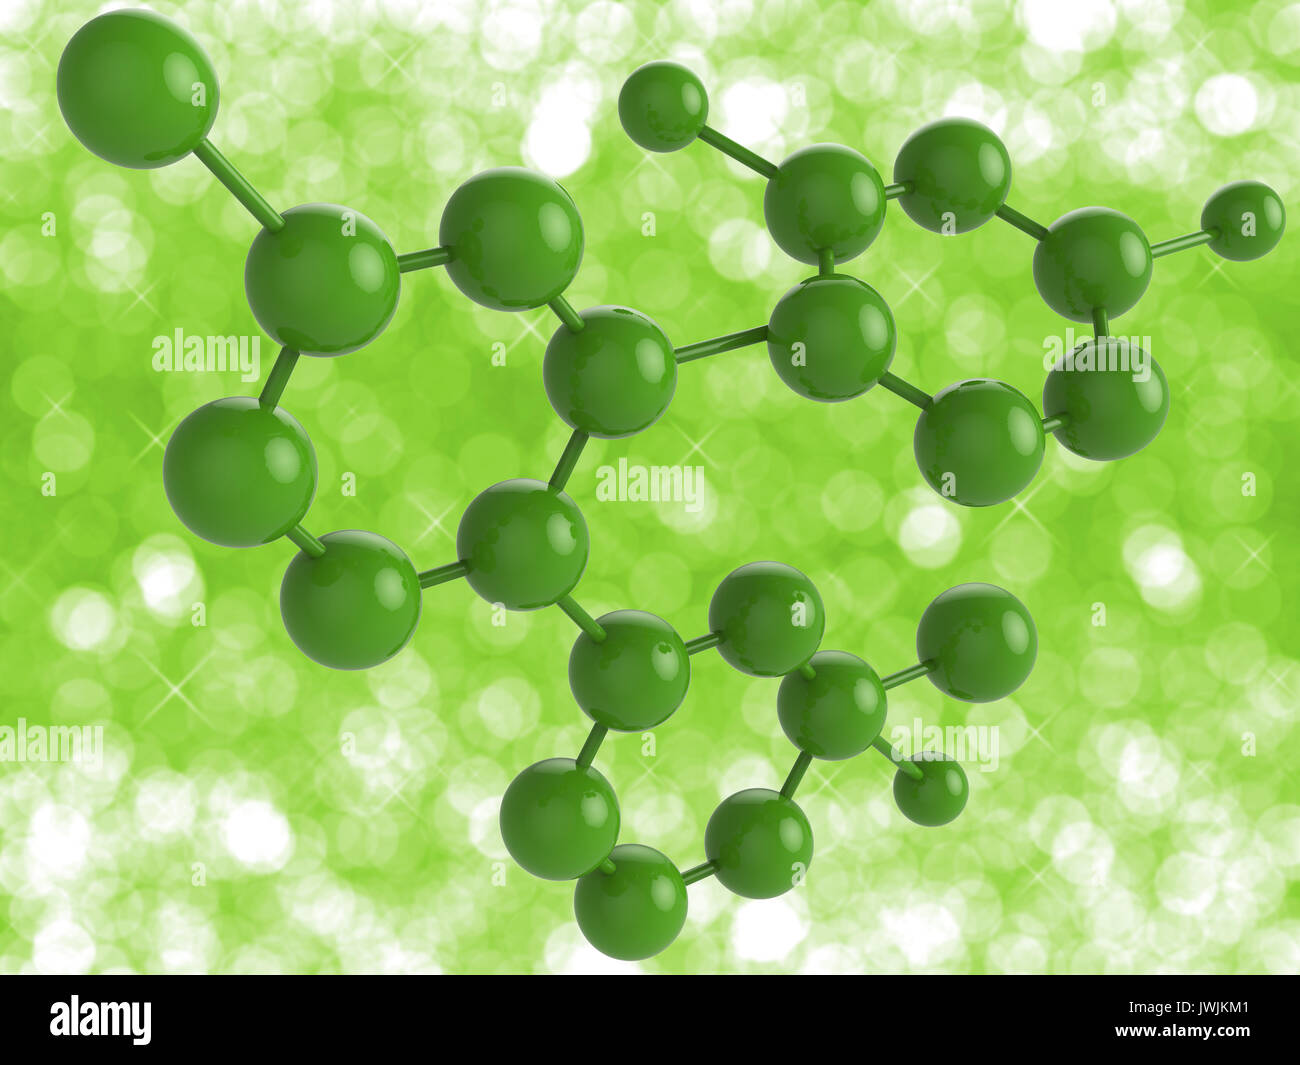 Молекула видна. Молекула зеленая. Молекулы фон зеленый. Структура молекулы зеленый фон. Салатовый цвет молекула.